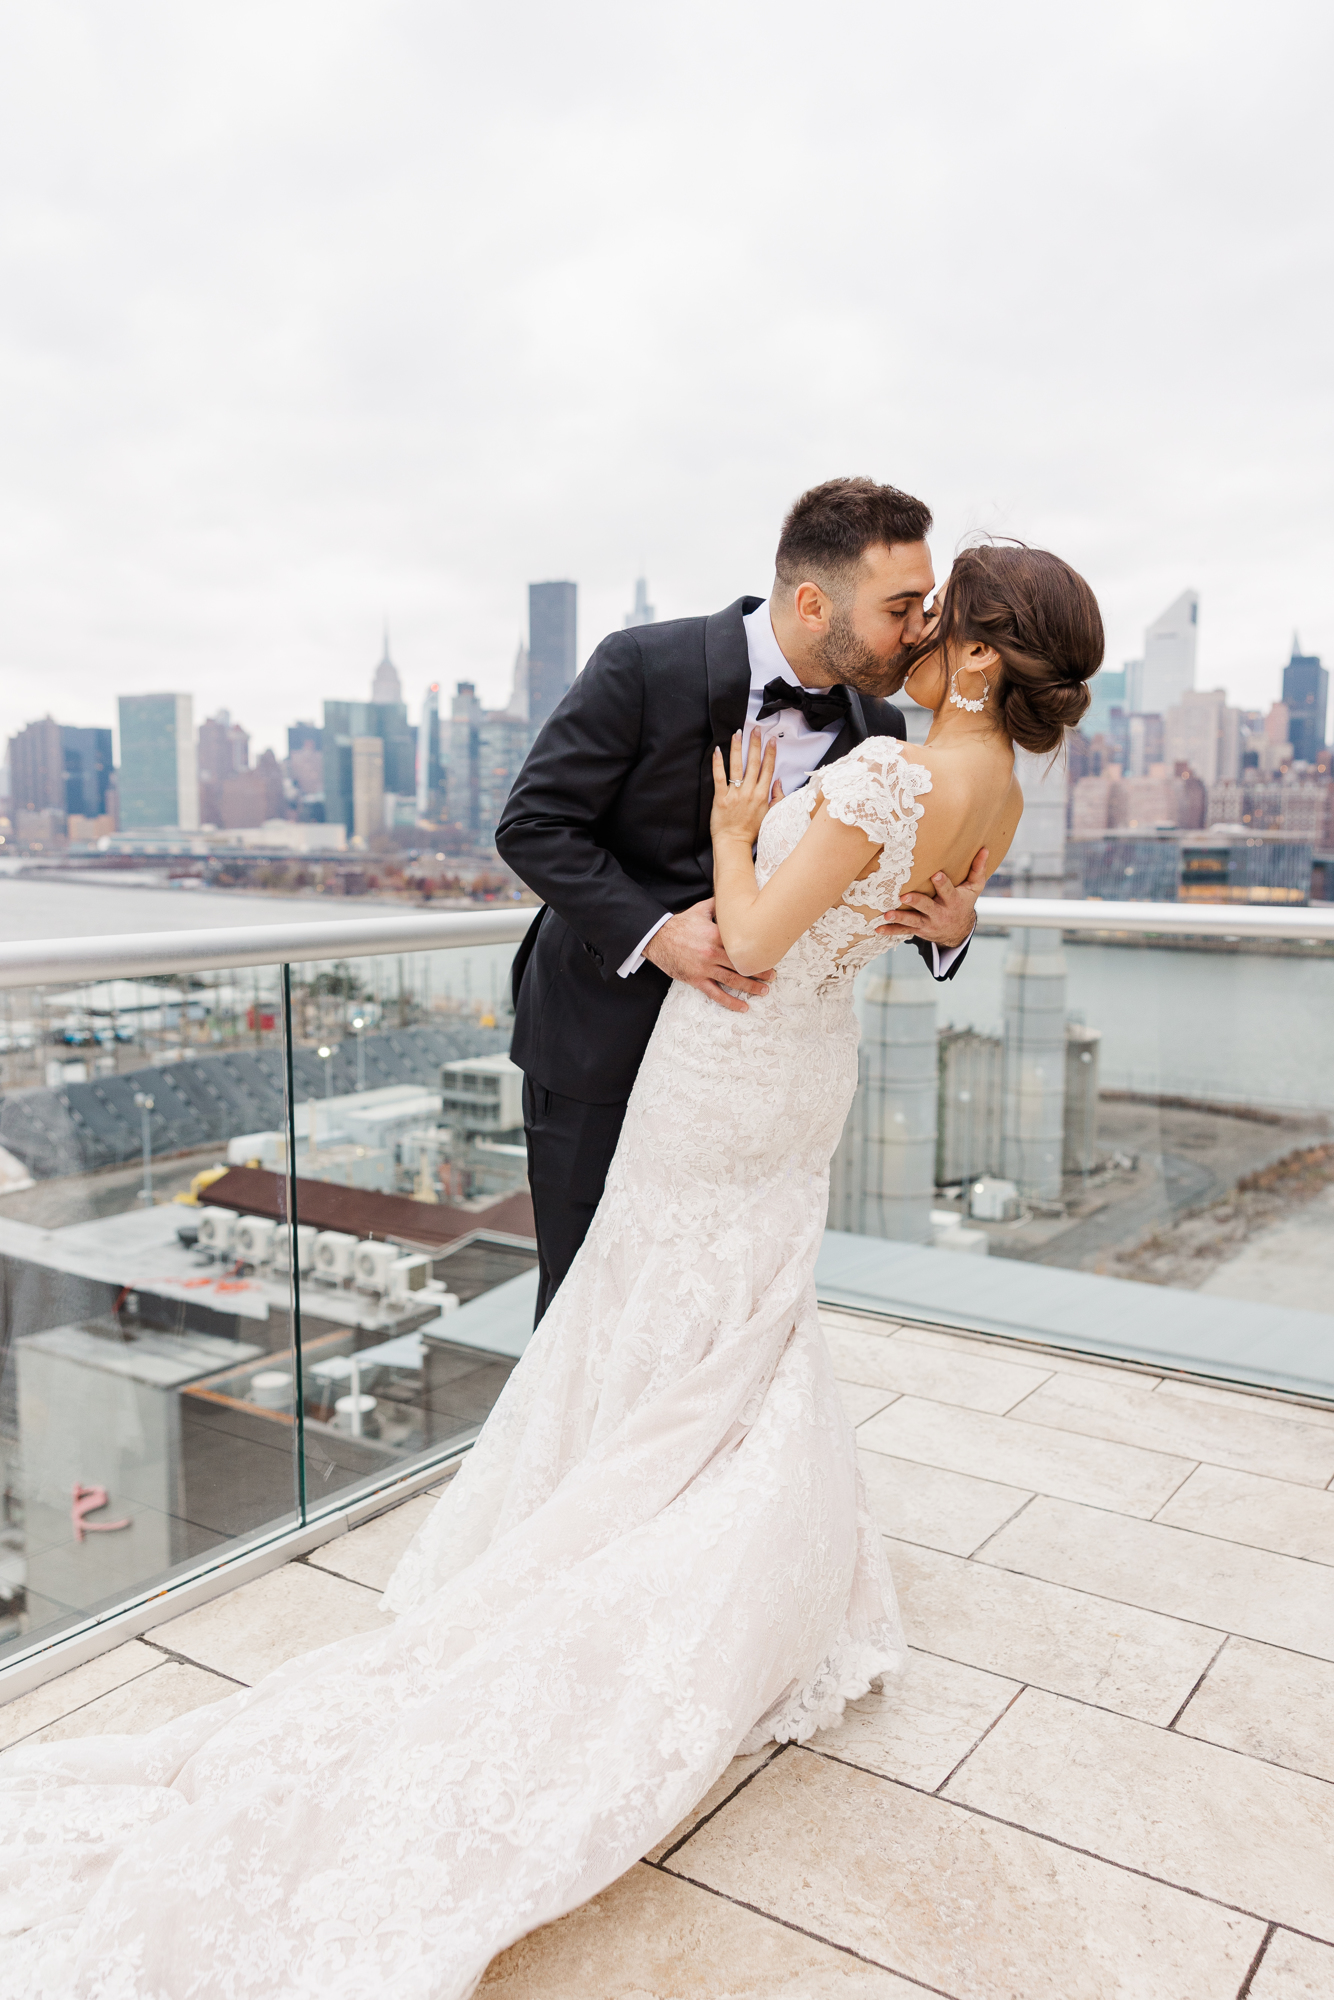 Underrated Long Island City, NY Wedding Venues